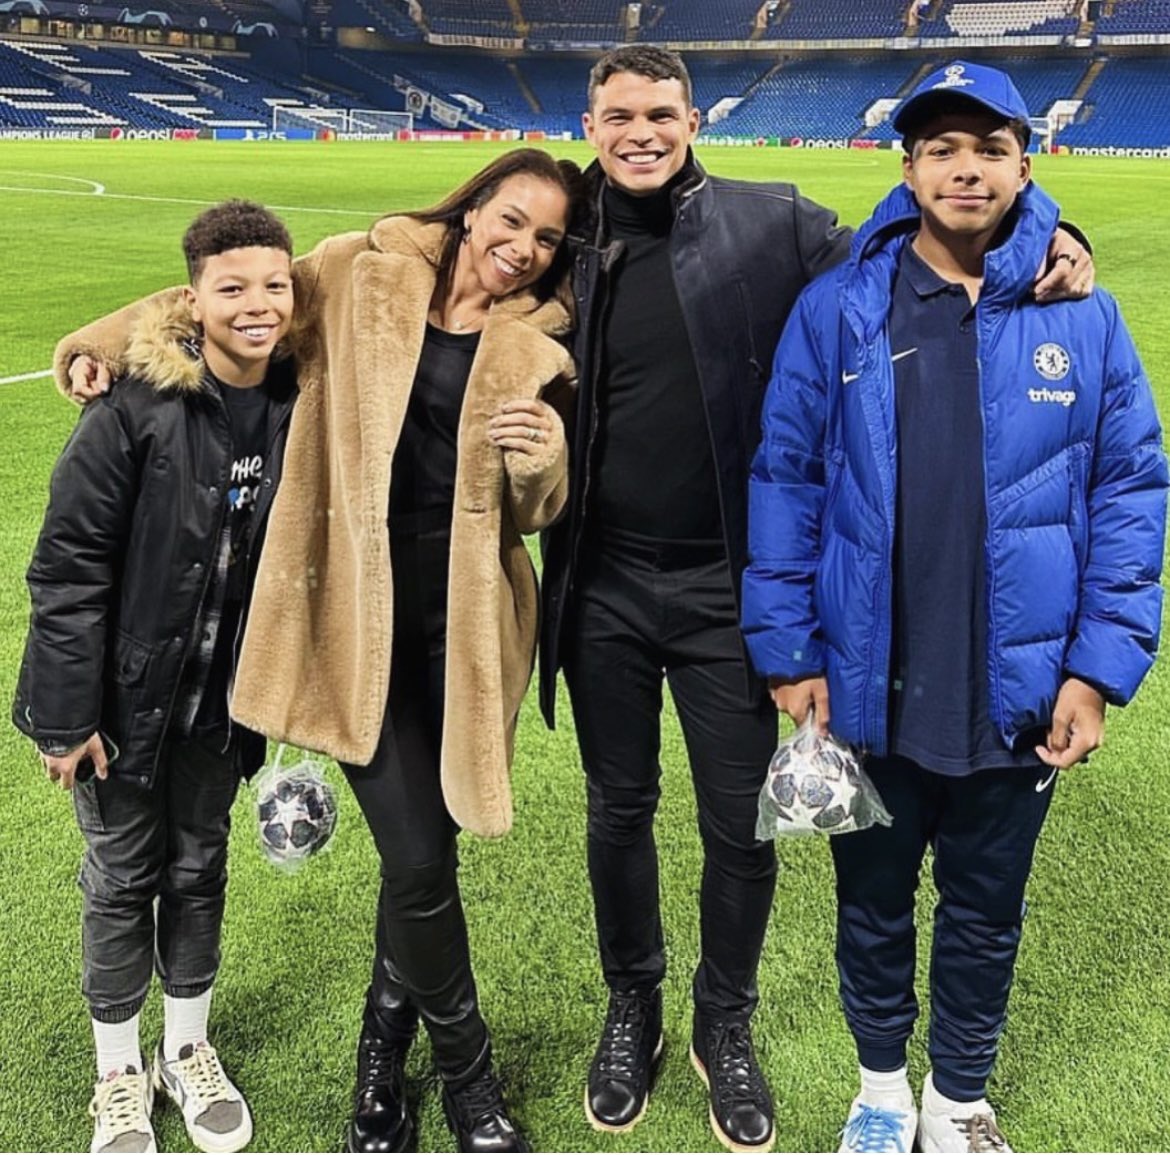 Thiago Silva & his family at Stamford Bridge 💙